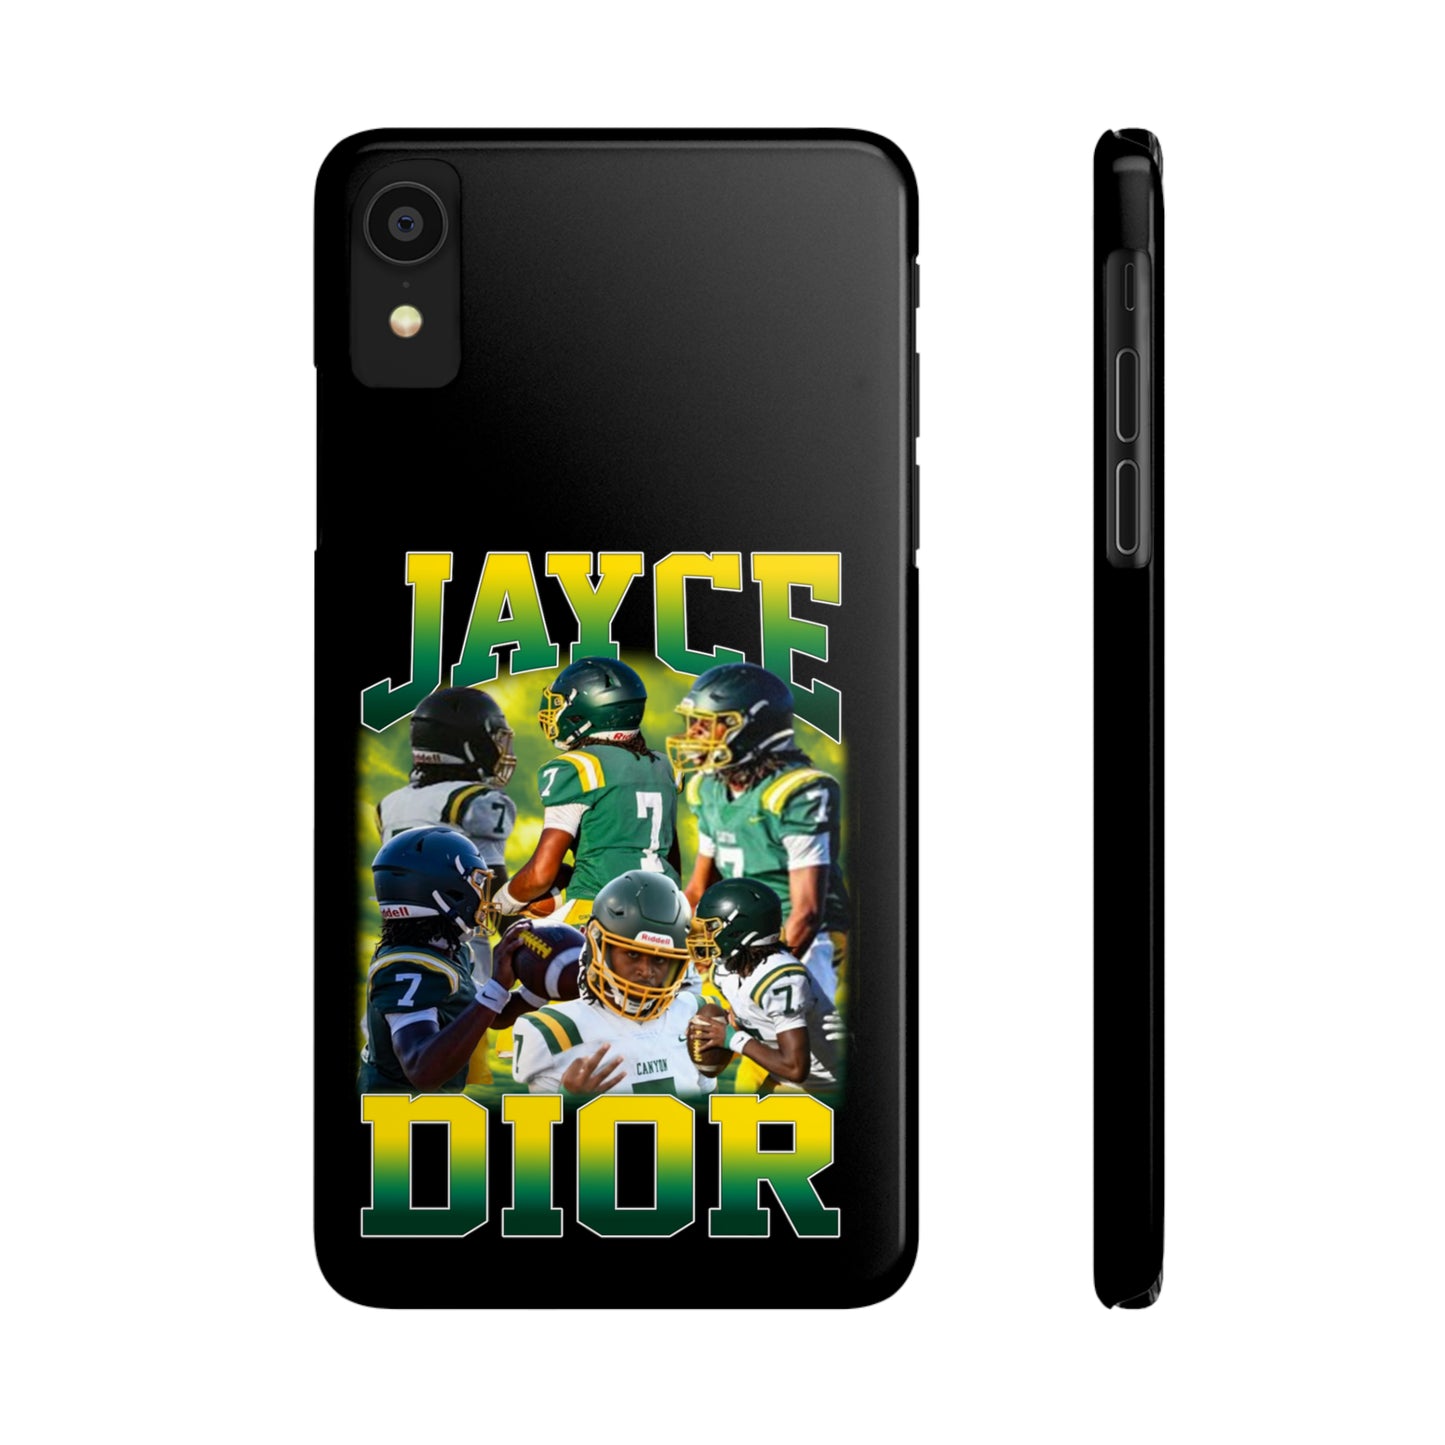 Jayce Dior Phone Case